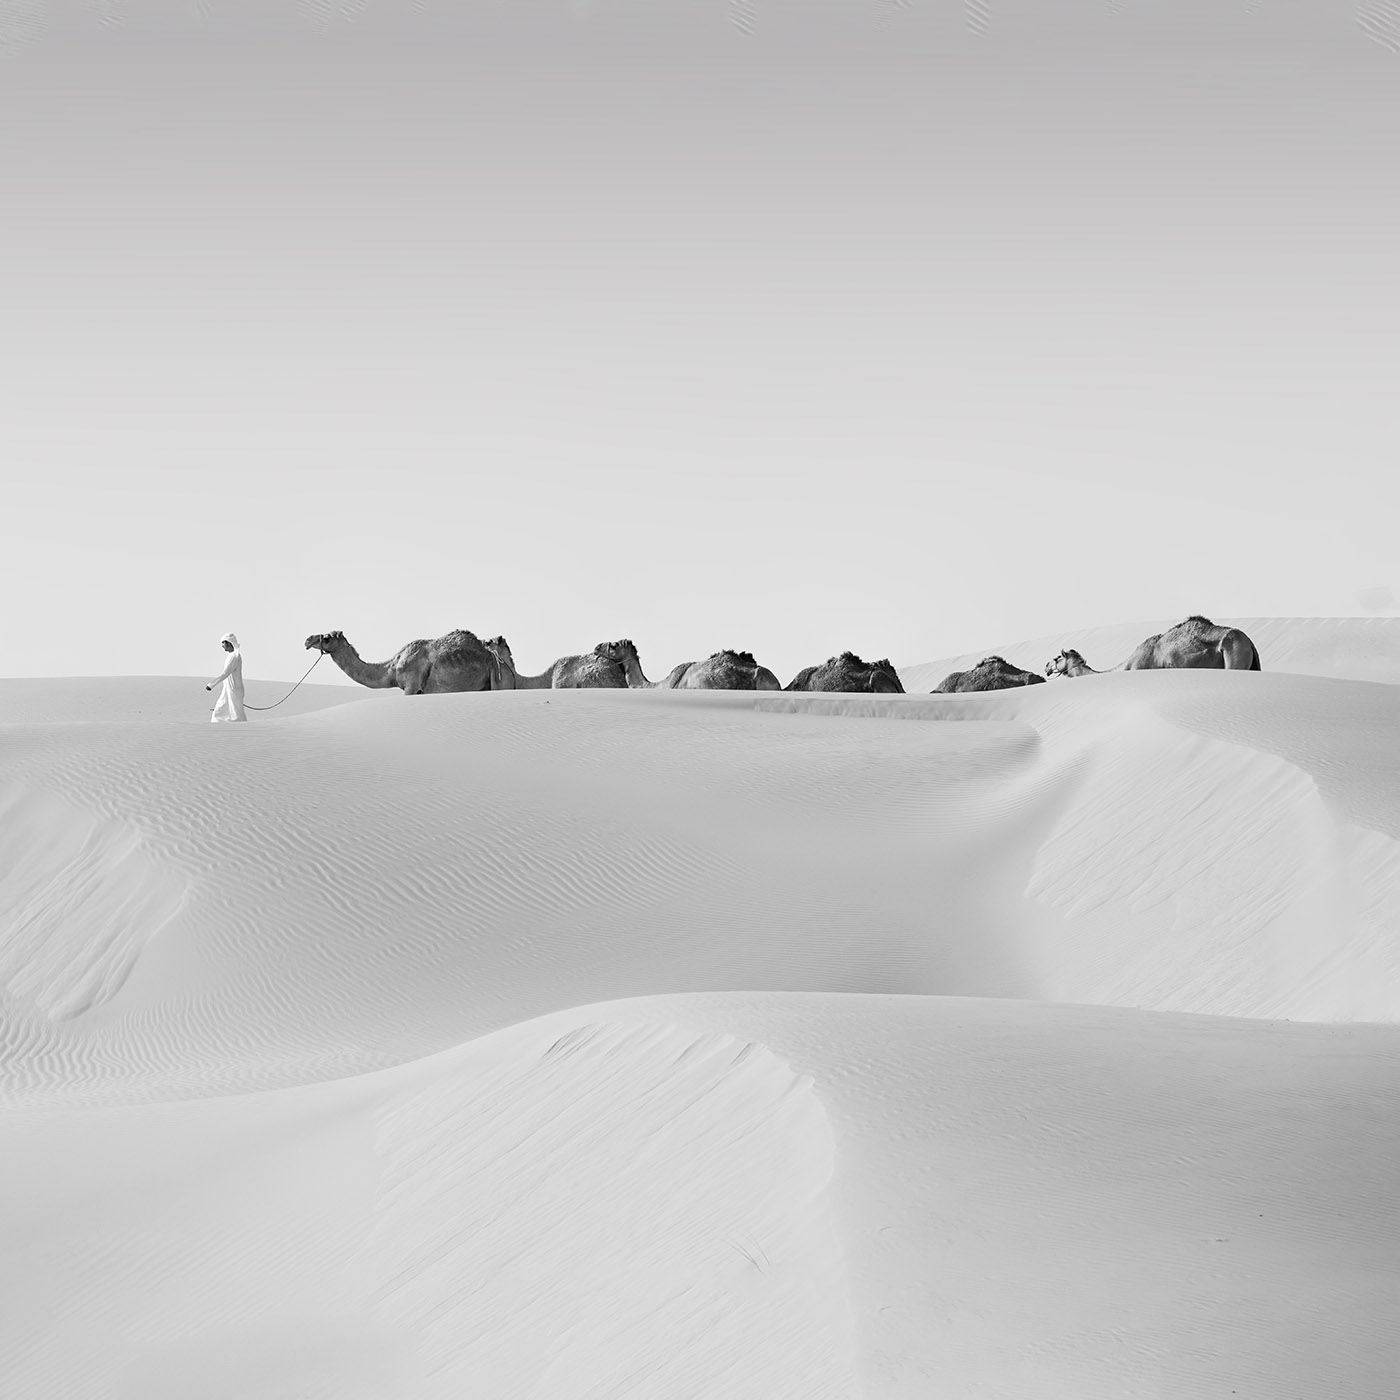 “Decisive” in the dunes of Liwa desert in Abu Dhabi